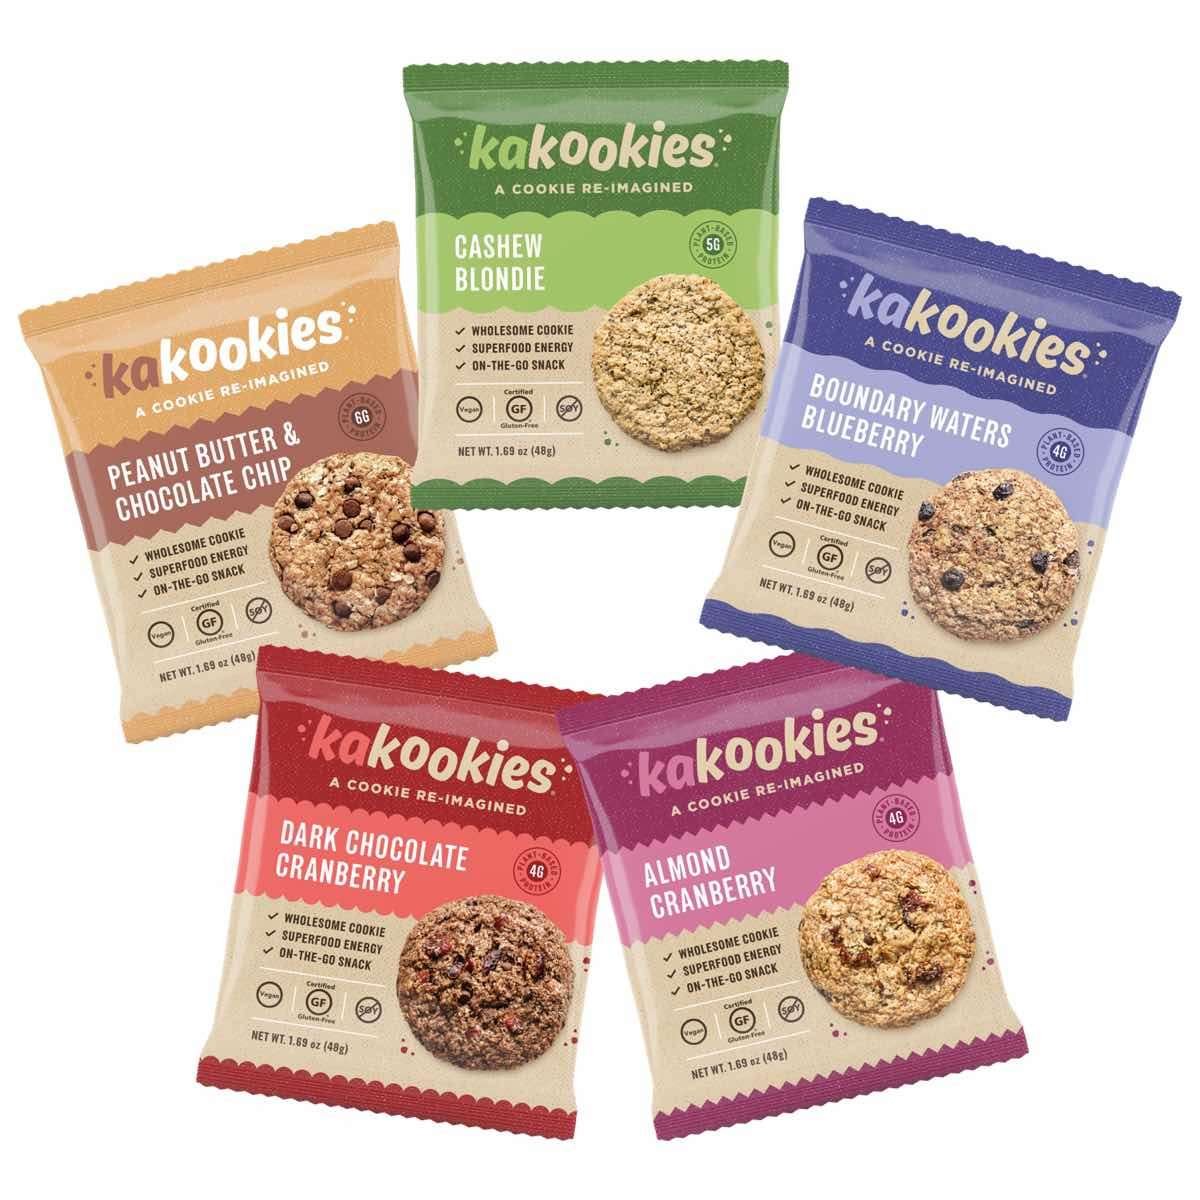 Kakookies healthier energy snack cookies with plant based protein and superfood ingredients